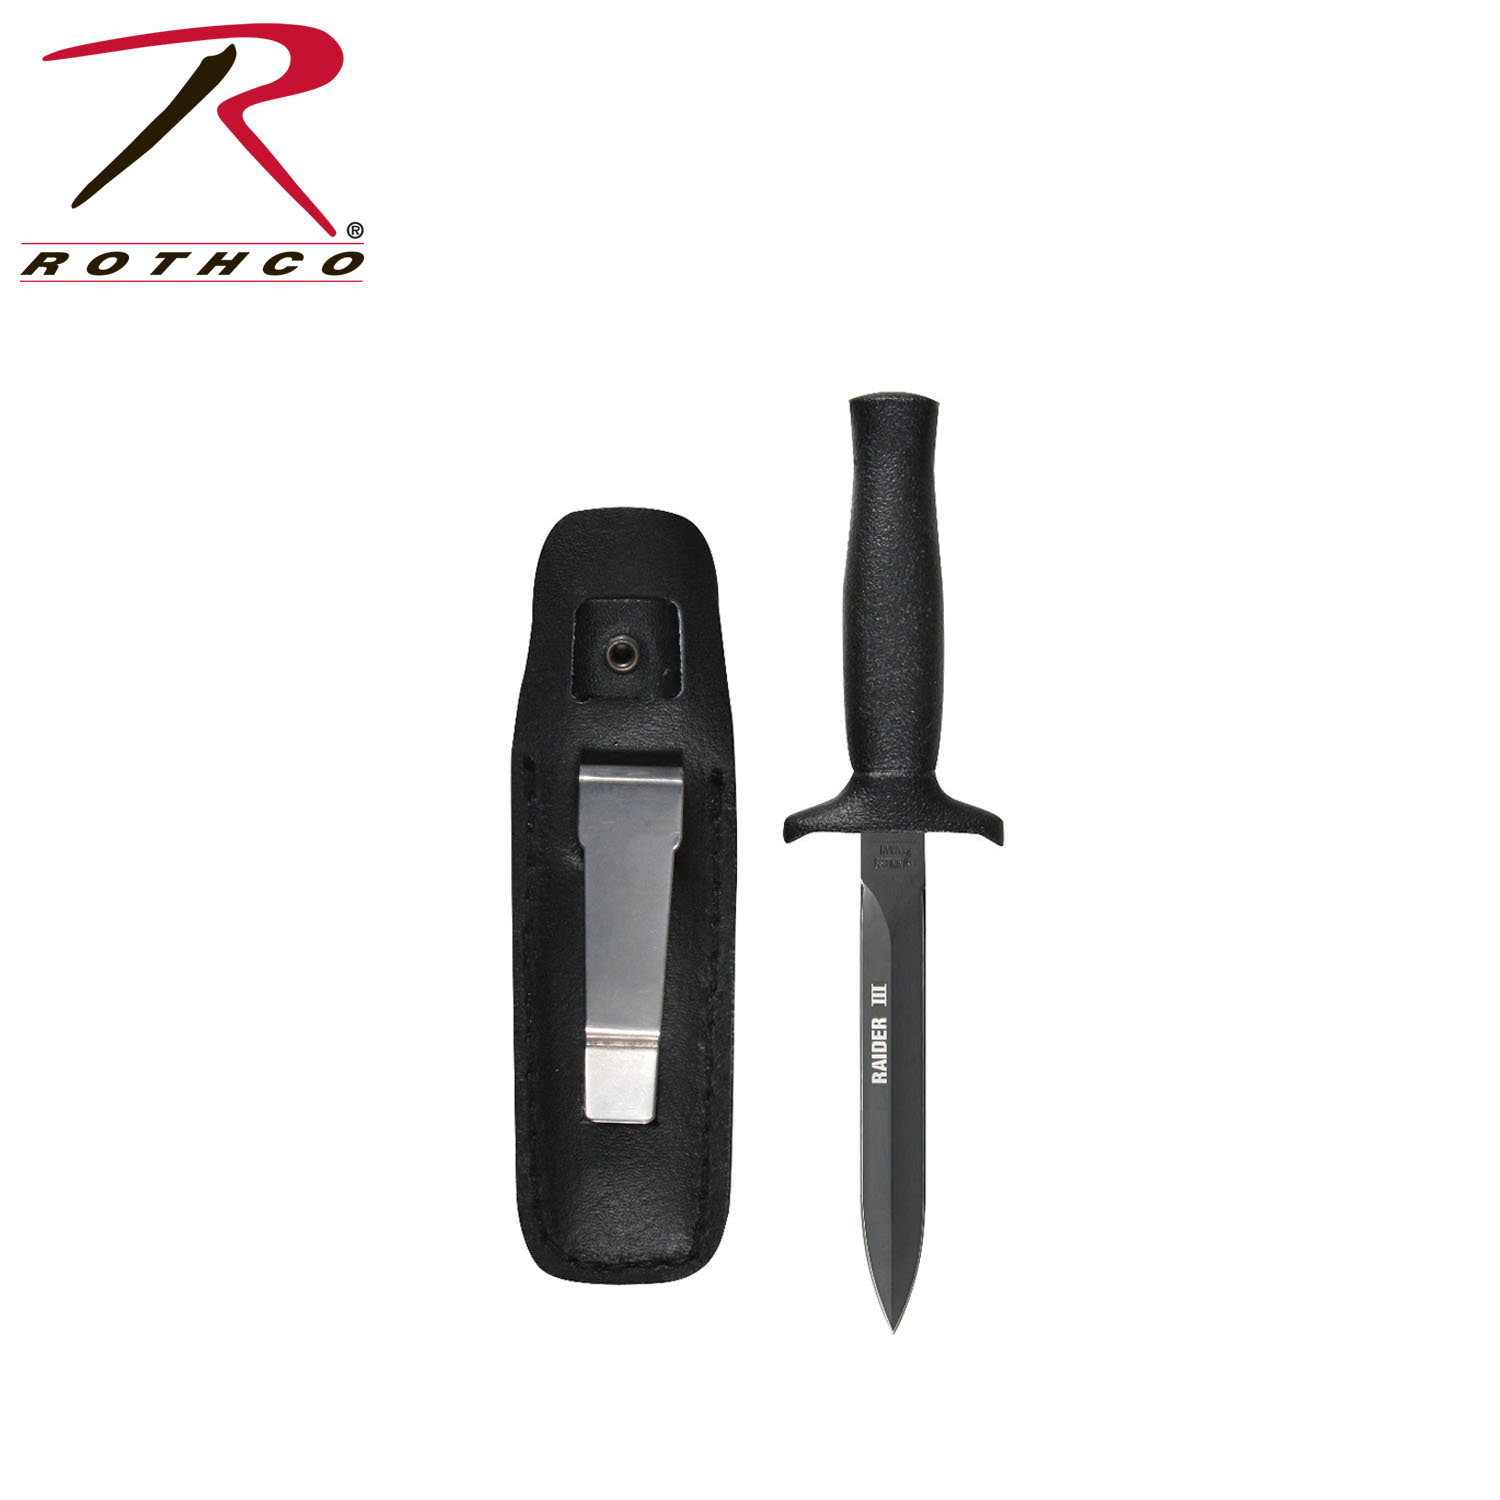 Rothco Raider III Boot Knife - Black